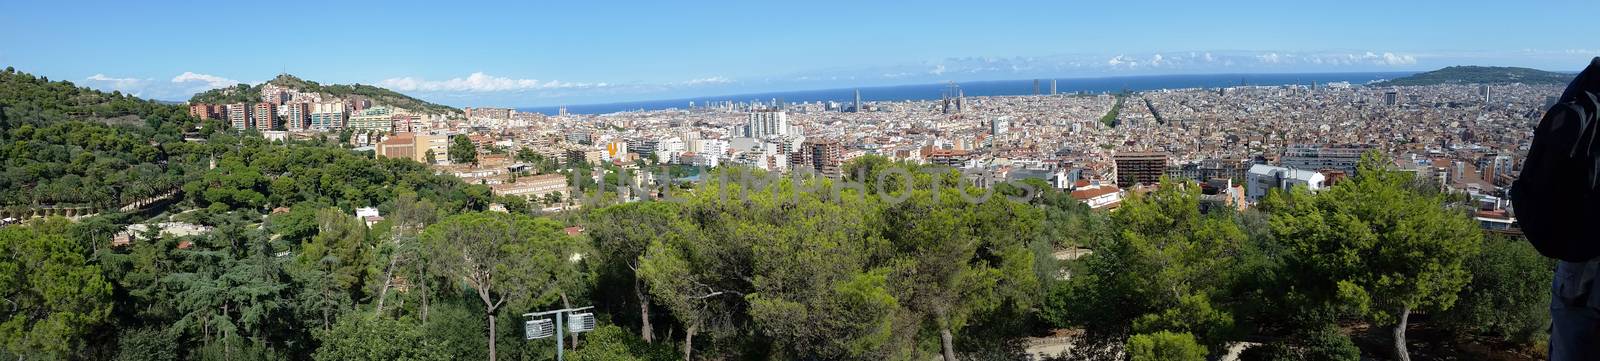 Panoramic View Of Barcelona by bensib